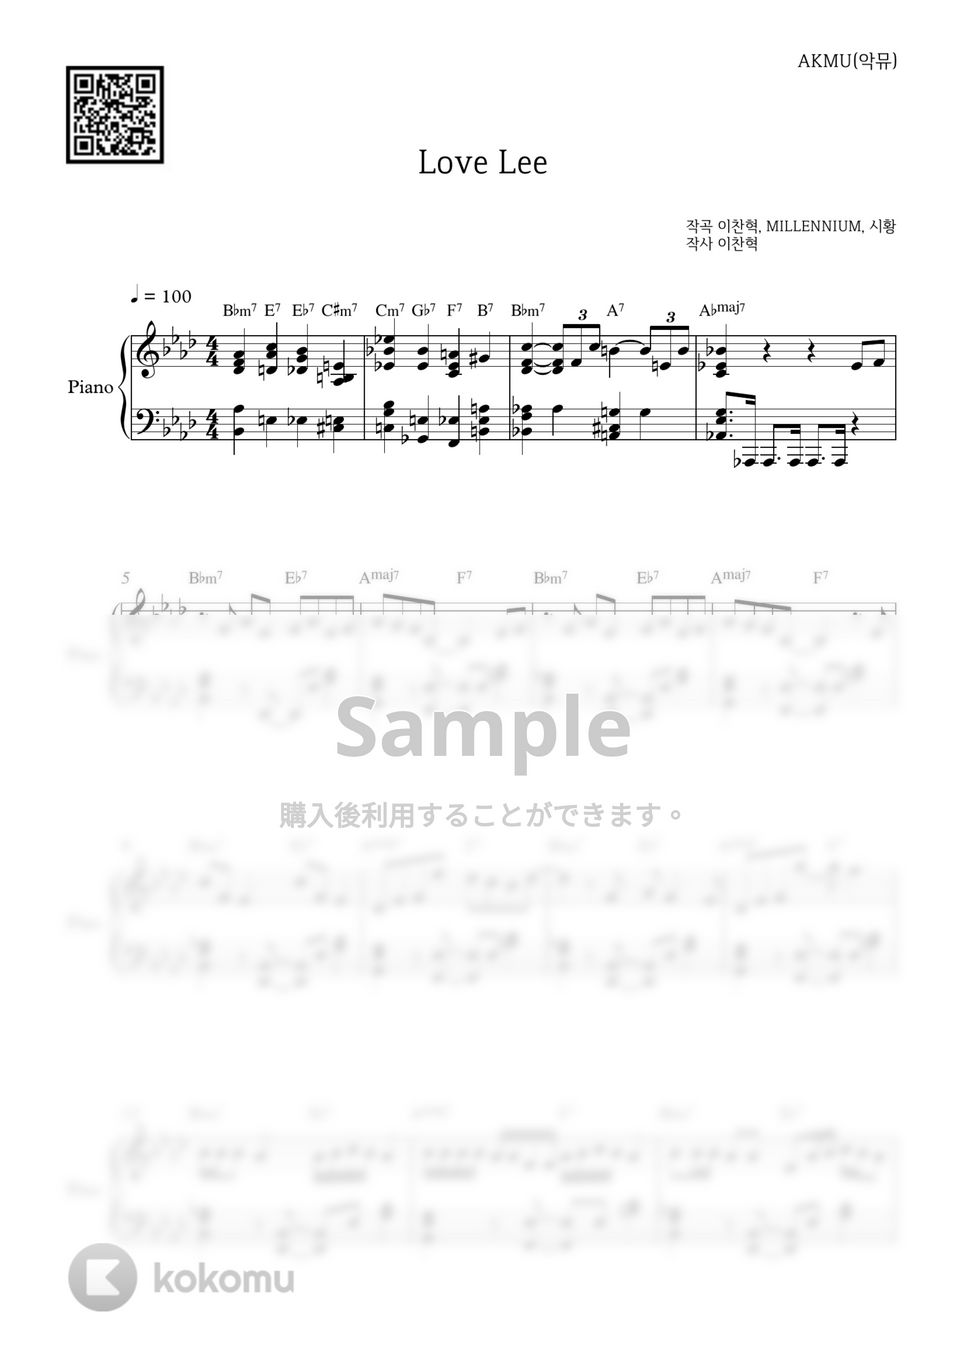 AKMU - Love Lee by PIANOiNU